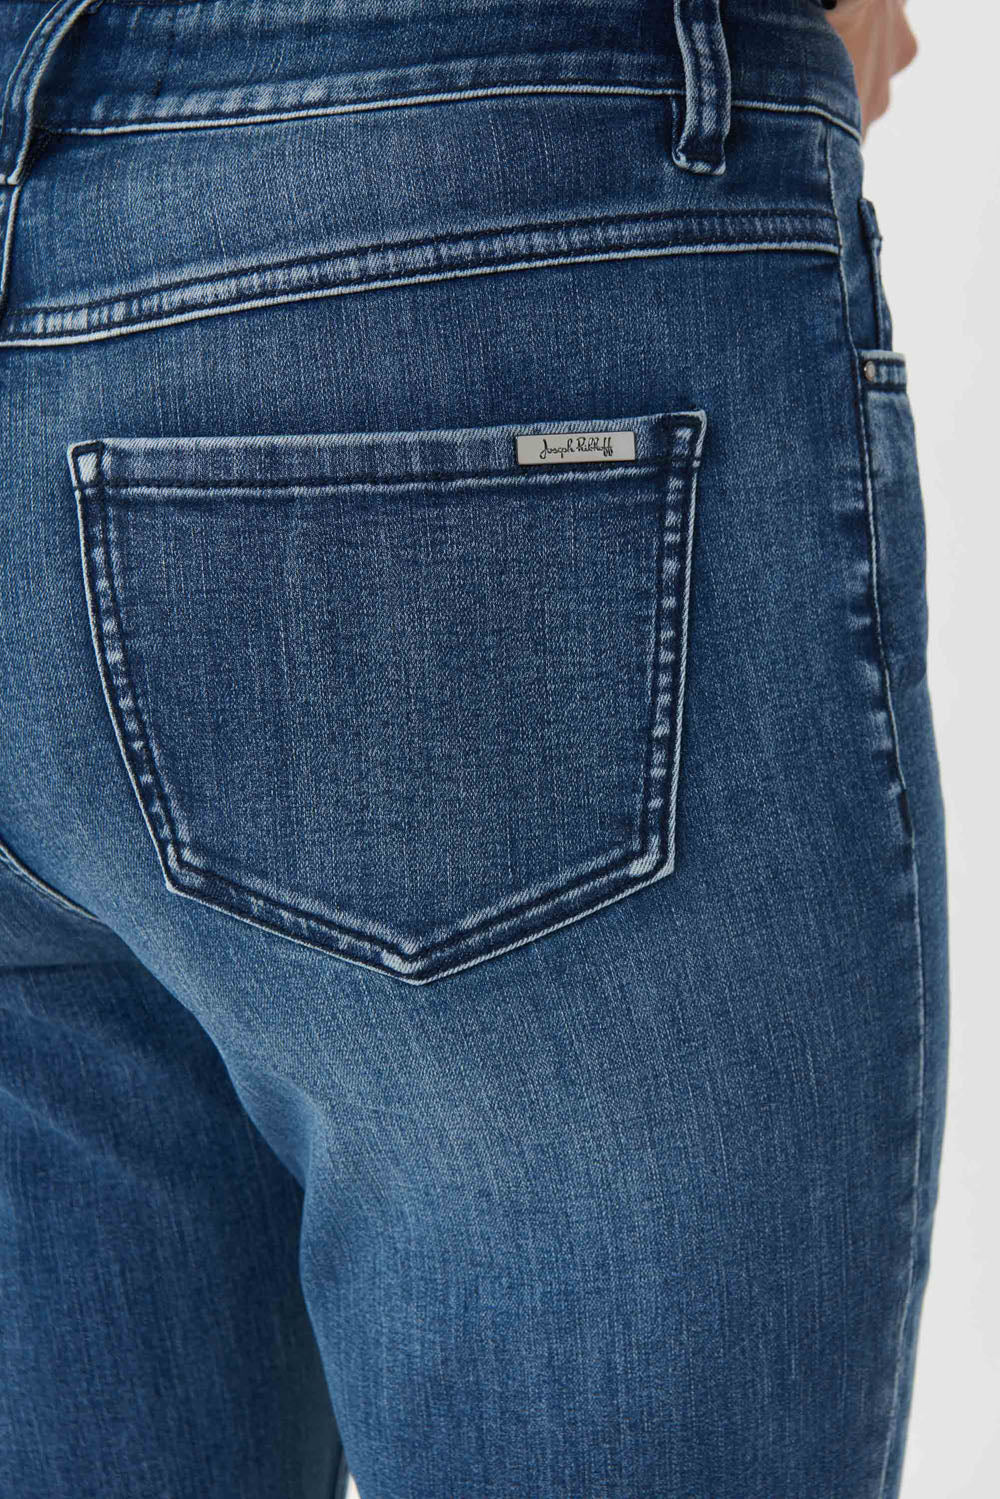 Joseph Ribkoff Medium Blue Denim Jeans Style 223941